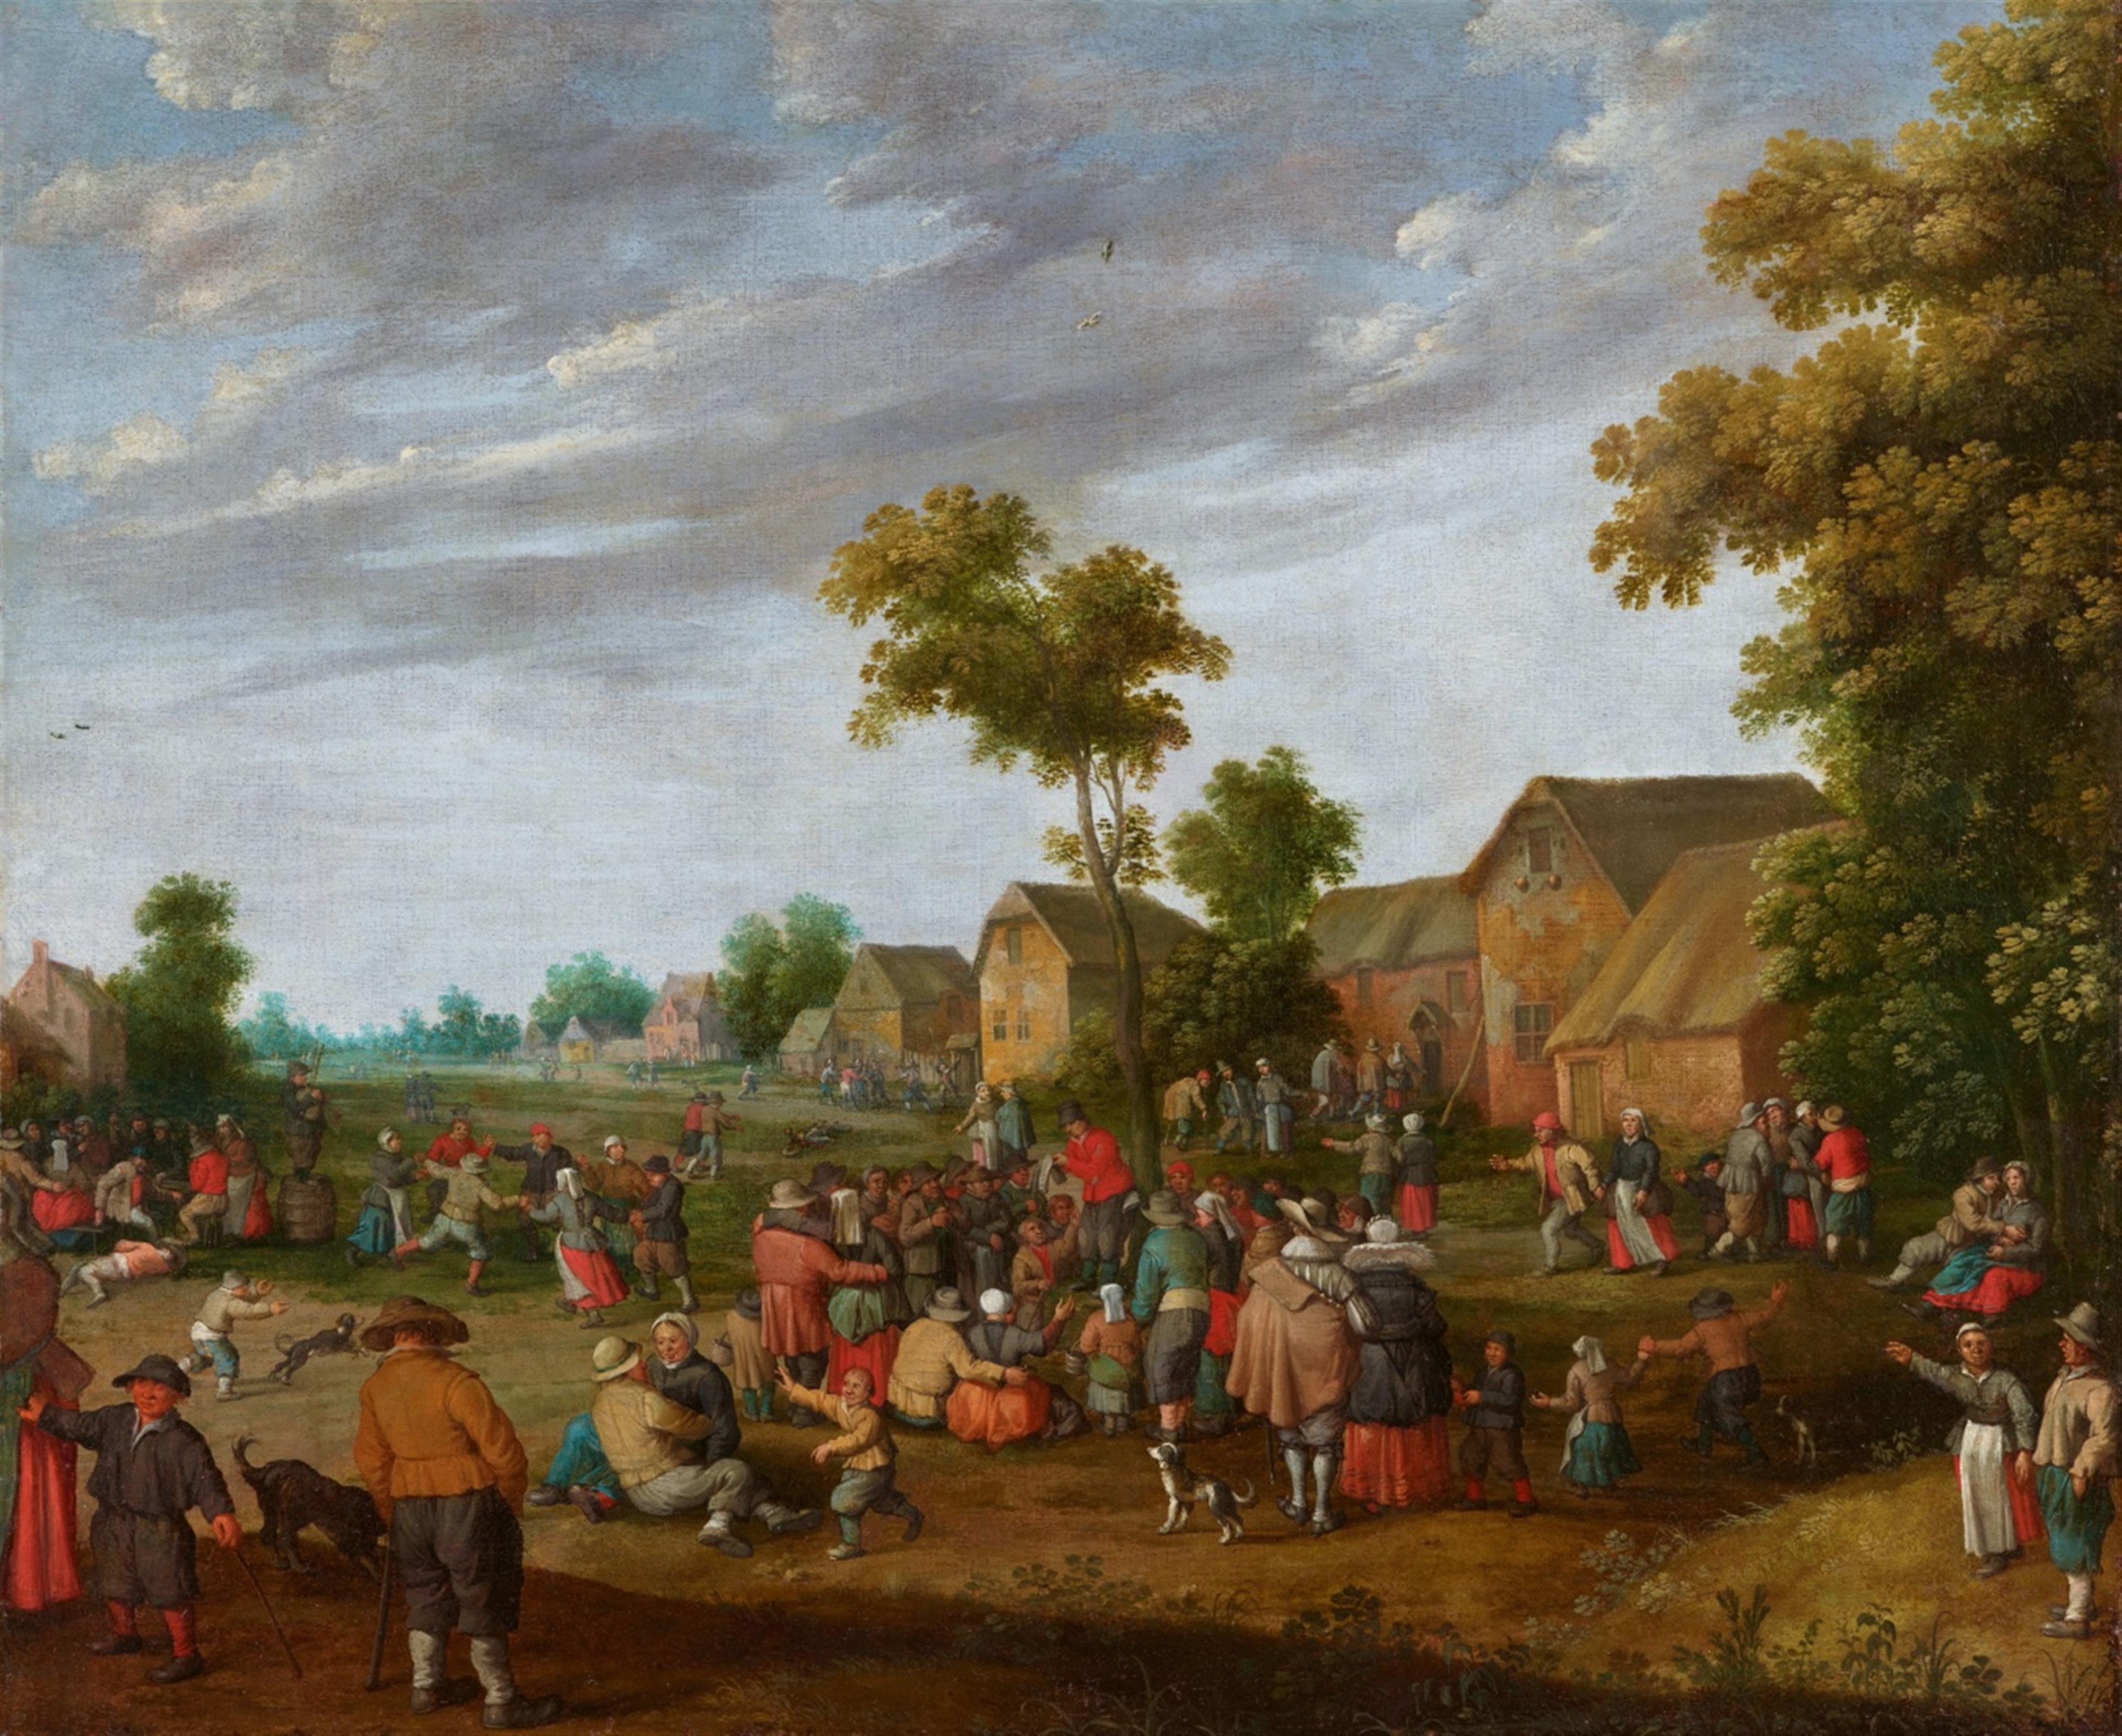 Joost Cornelisz. Droochsloot - Village Landscape with Peasant Festivities - image-1